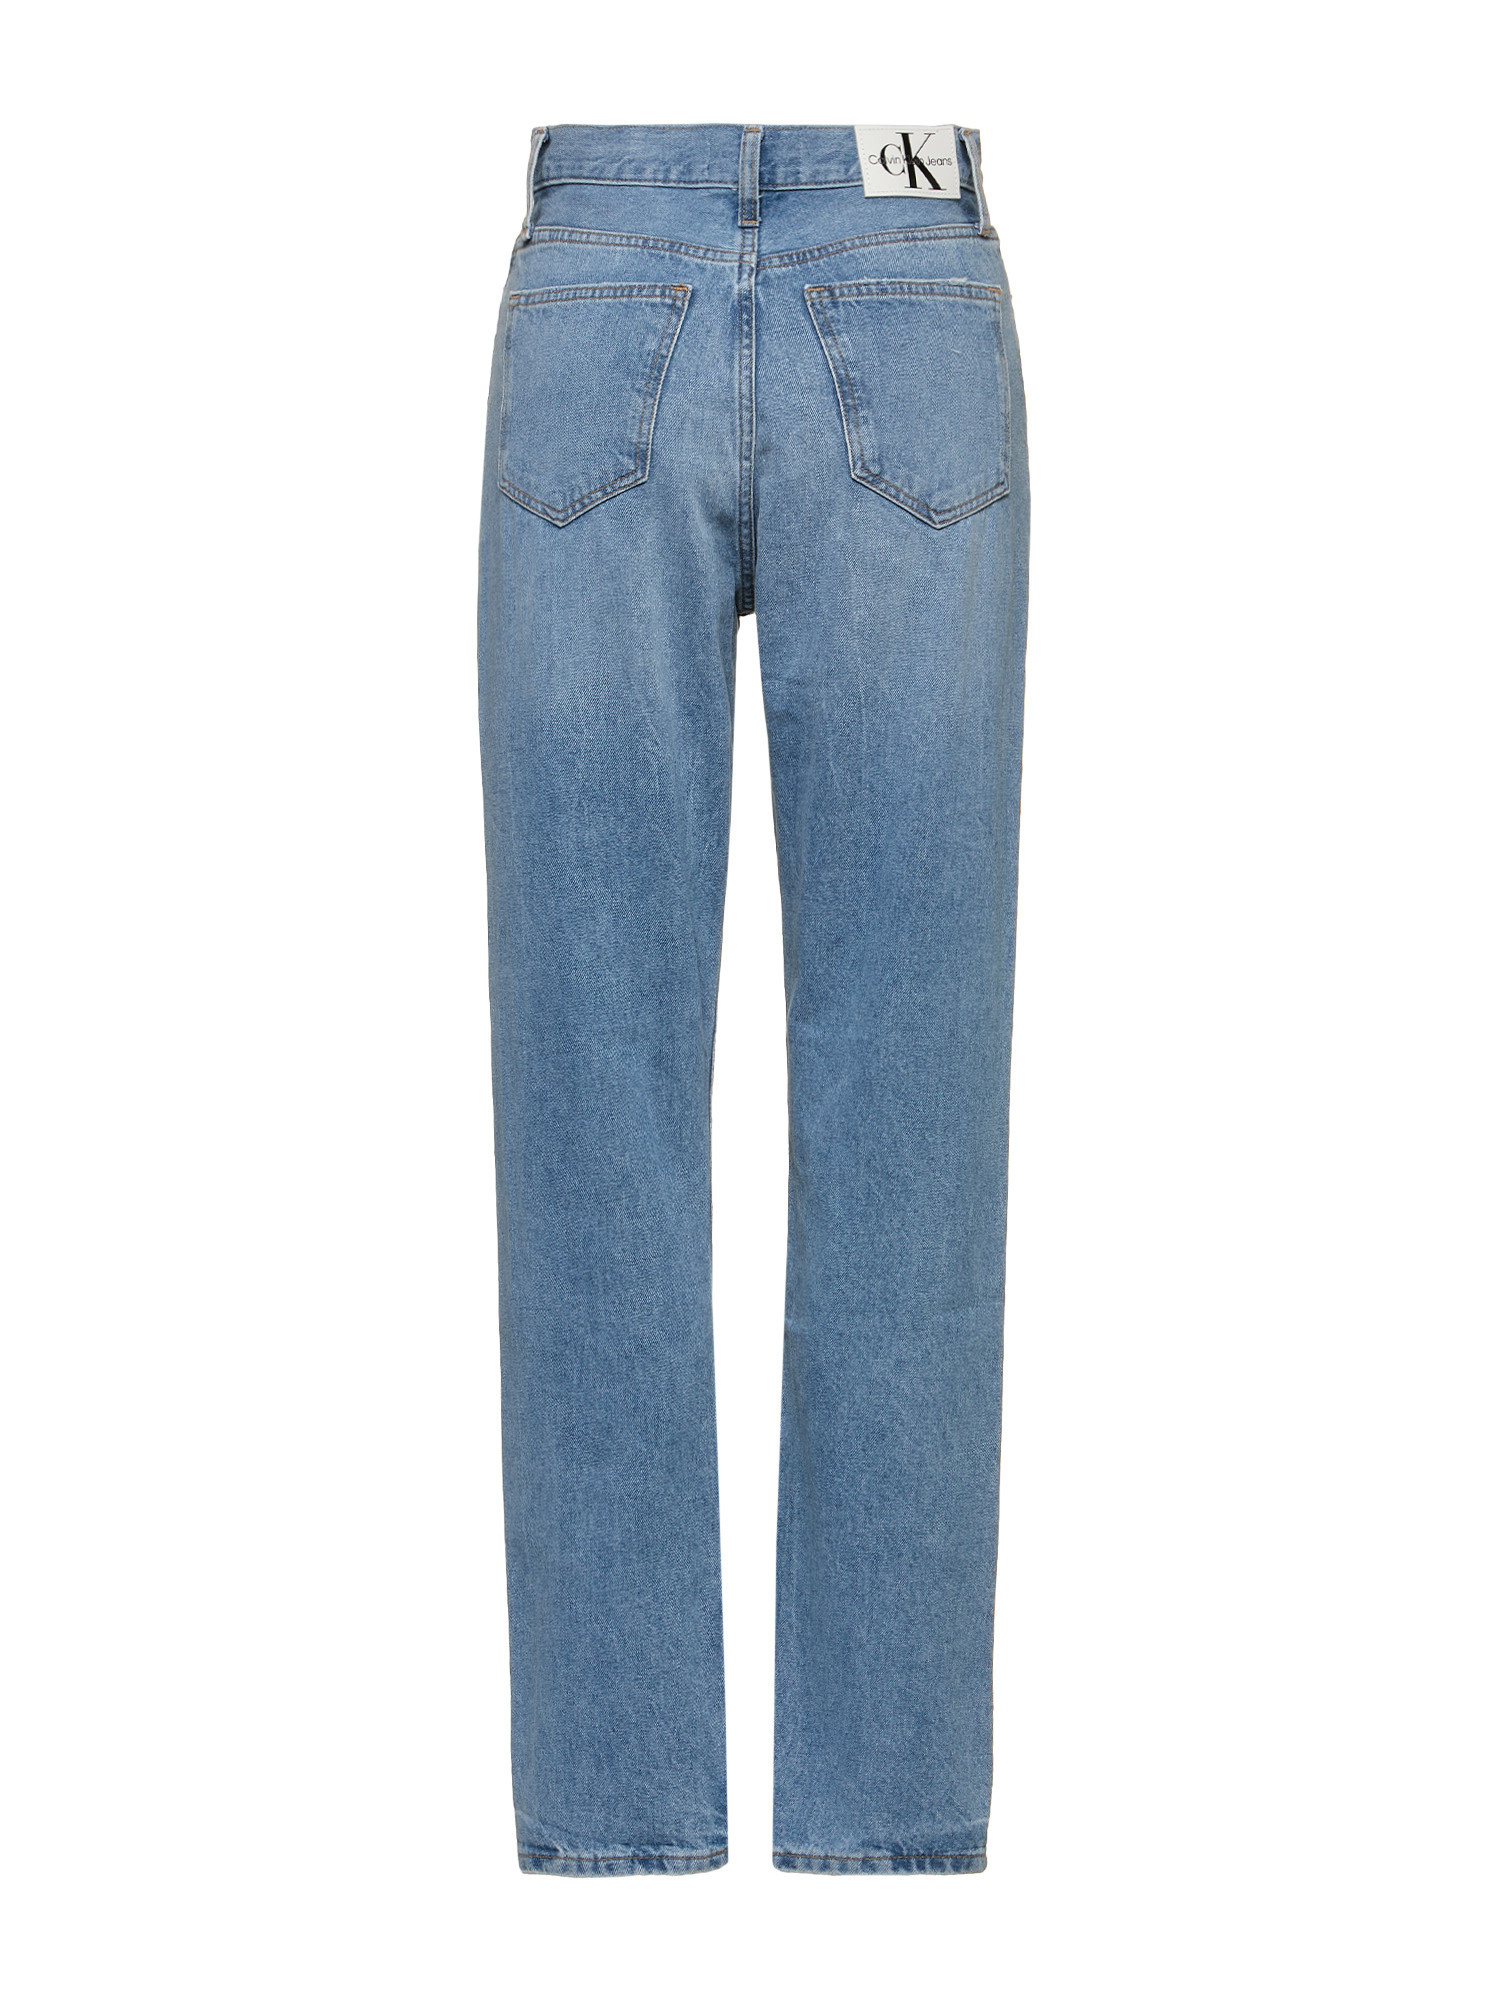 Calvin Klein Jeans -Jeans cinque tasche slim fit, Denim, large image number 1